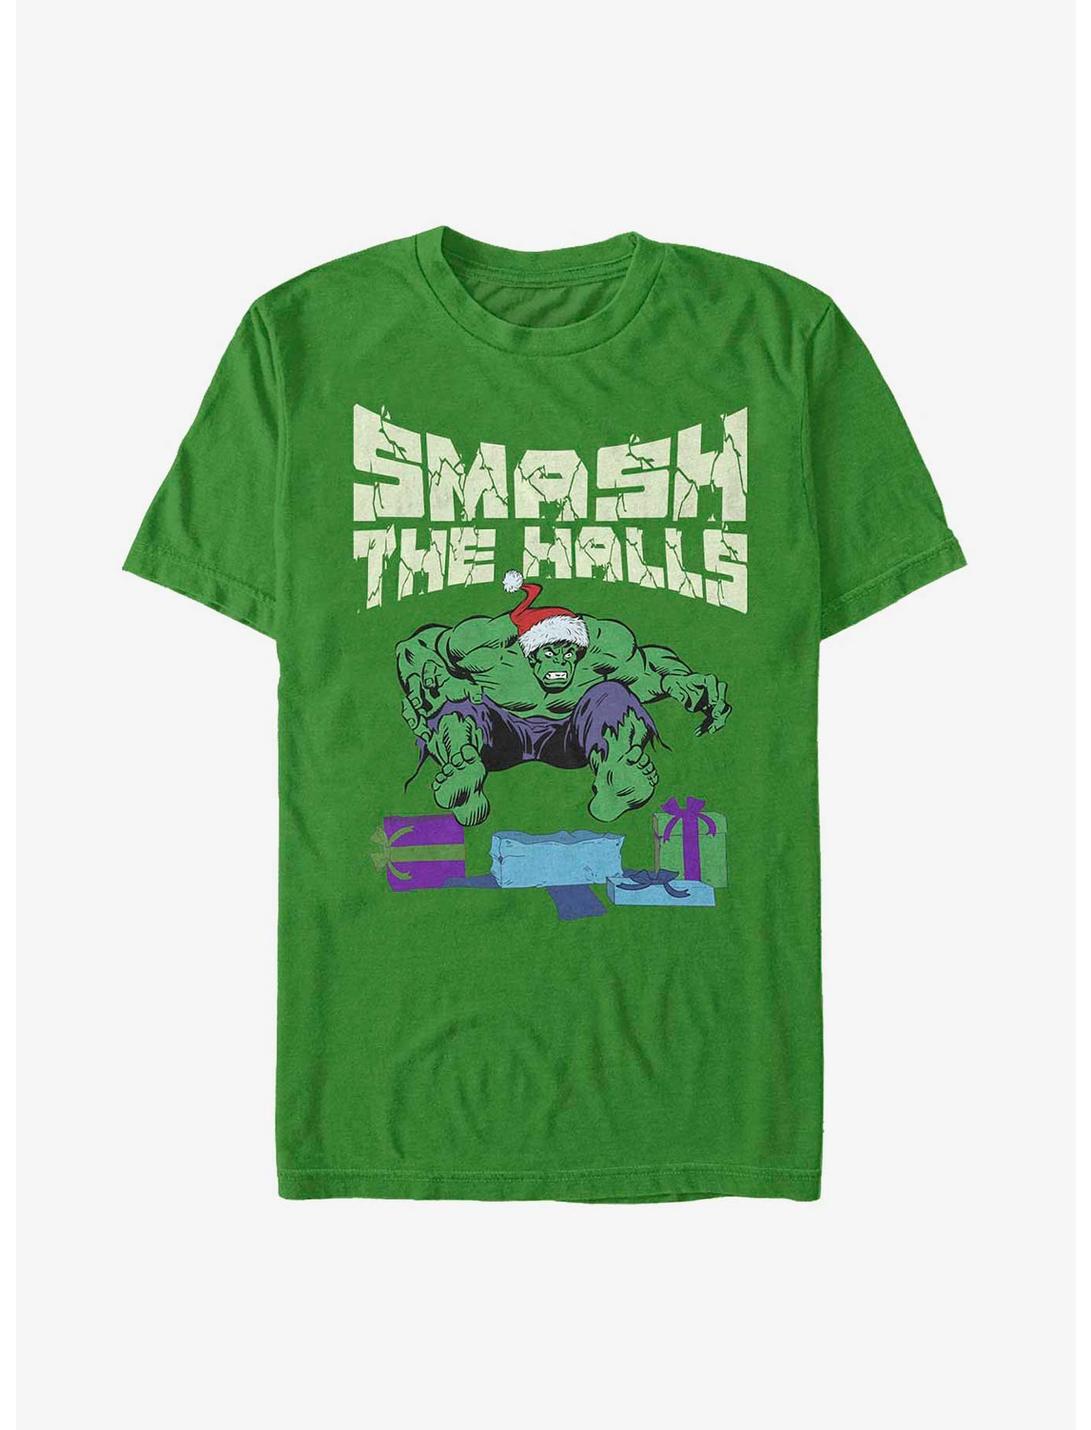 Marvel The Hulk Smash The Halls T-Shirt, KELLY, hi-res